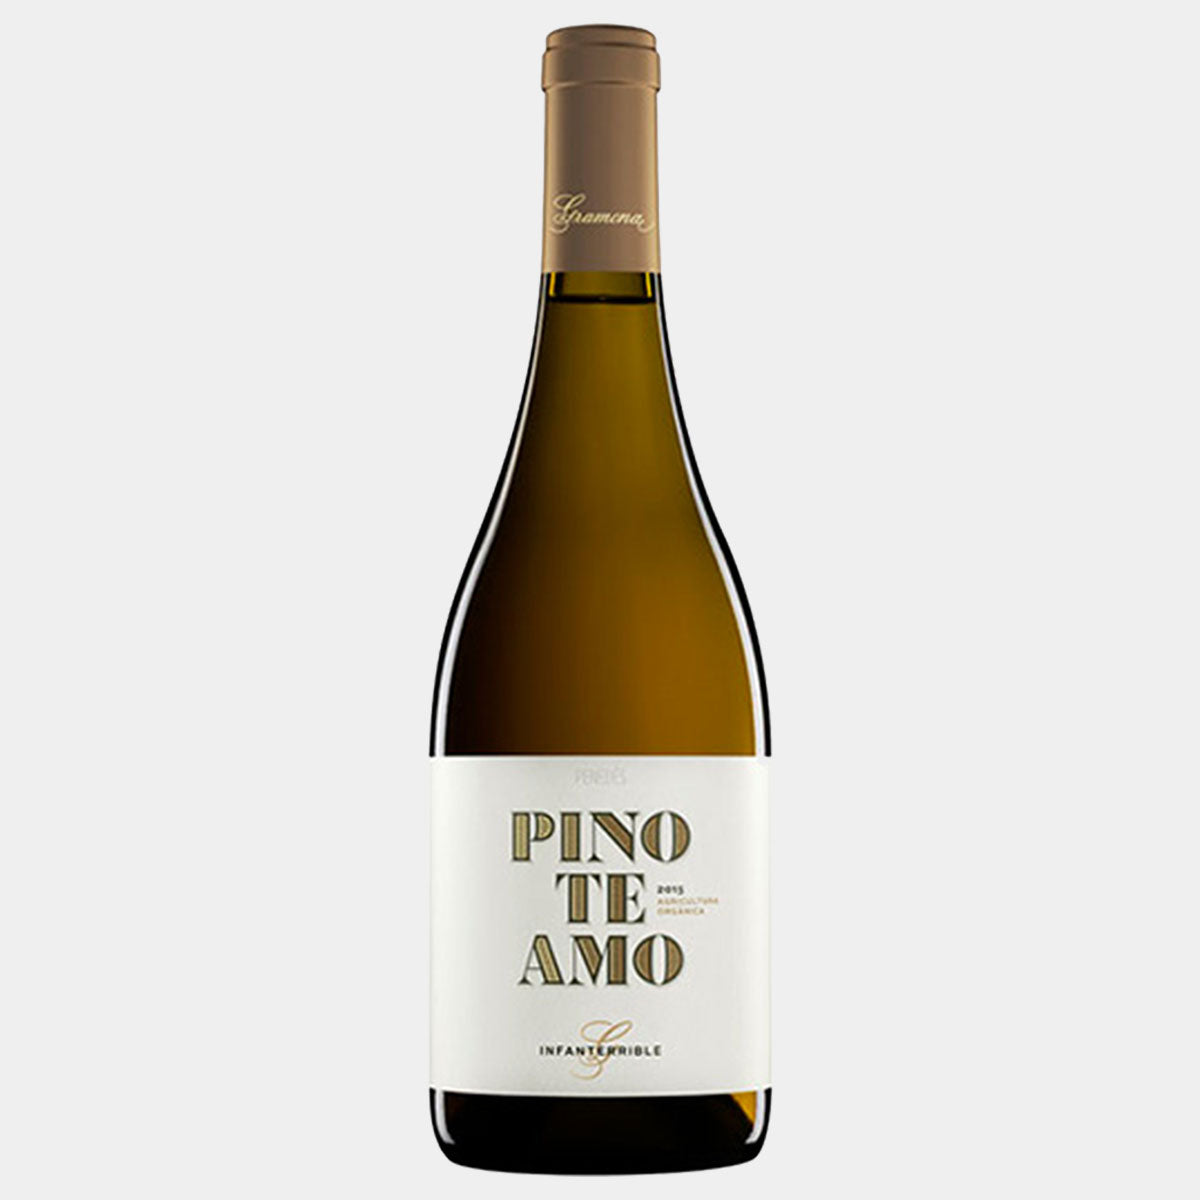 Pinoteamo - Wines and Copas Barcelona